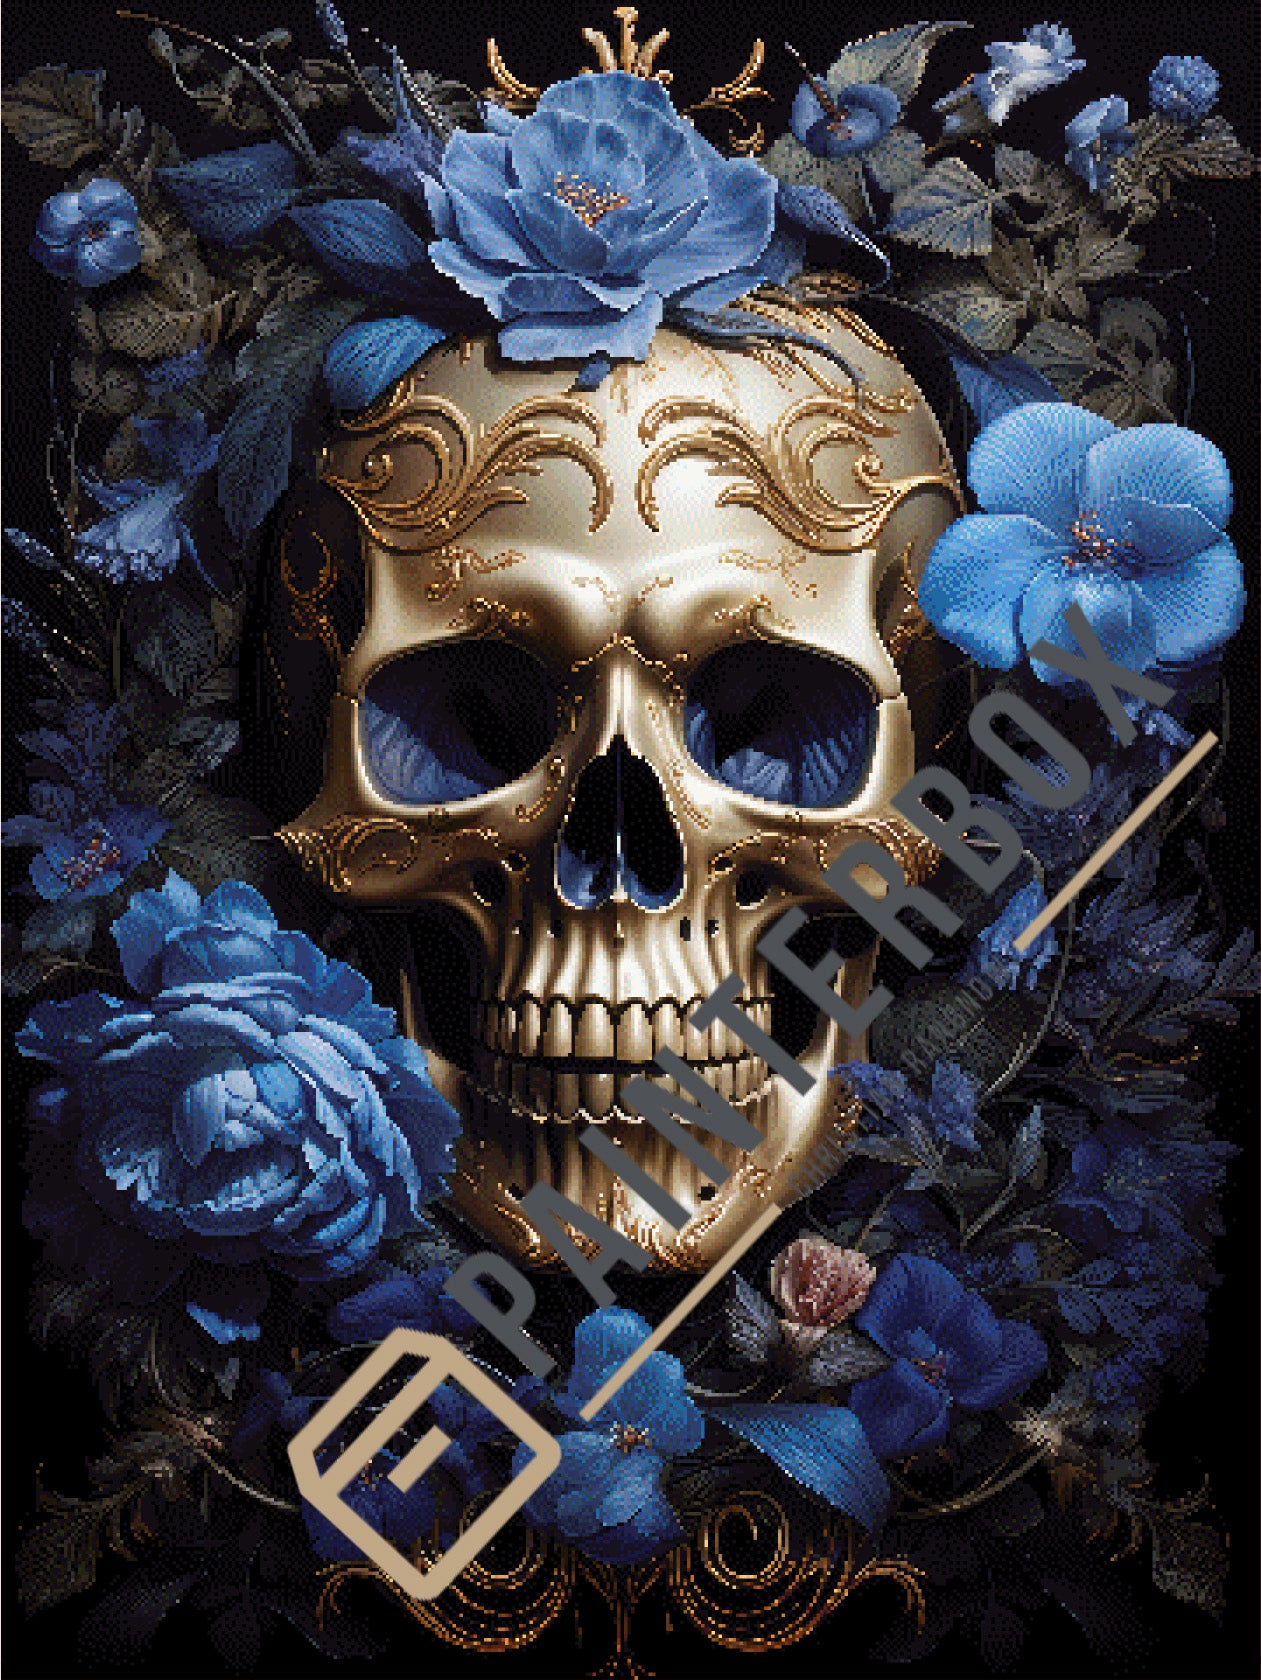 Blue Flower Skull by ArtRosa - 200 colors